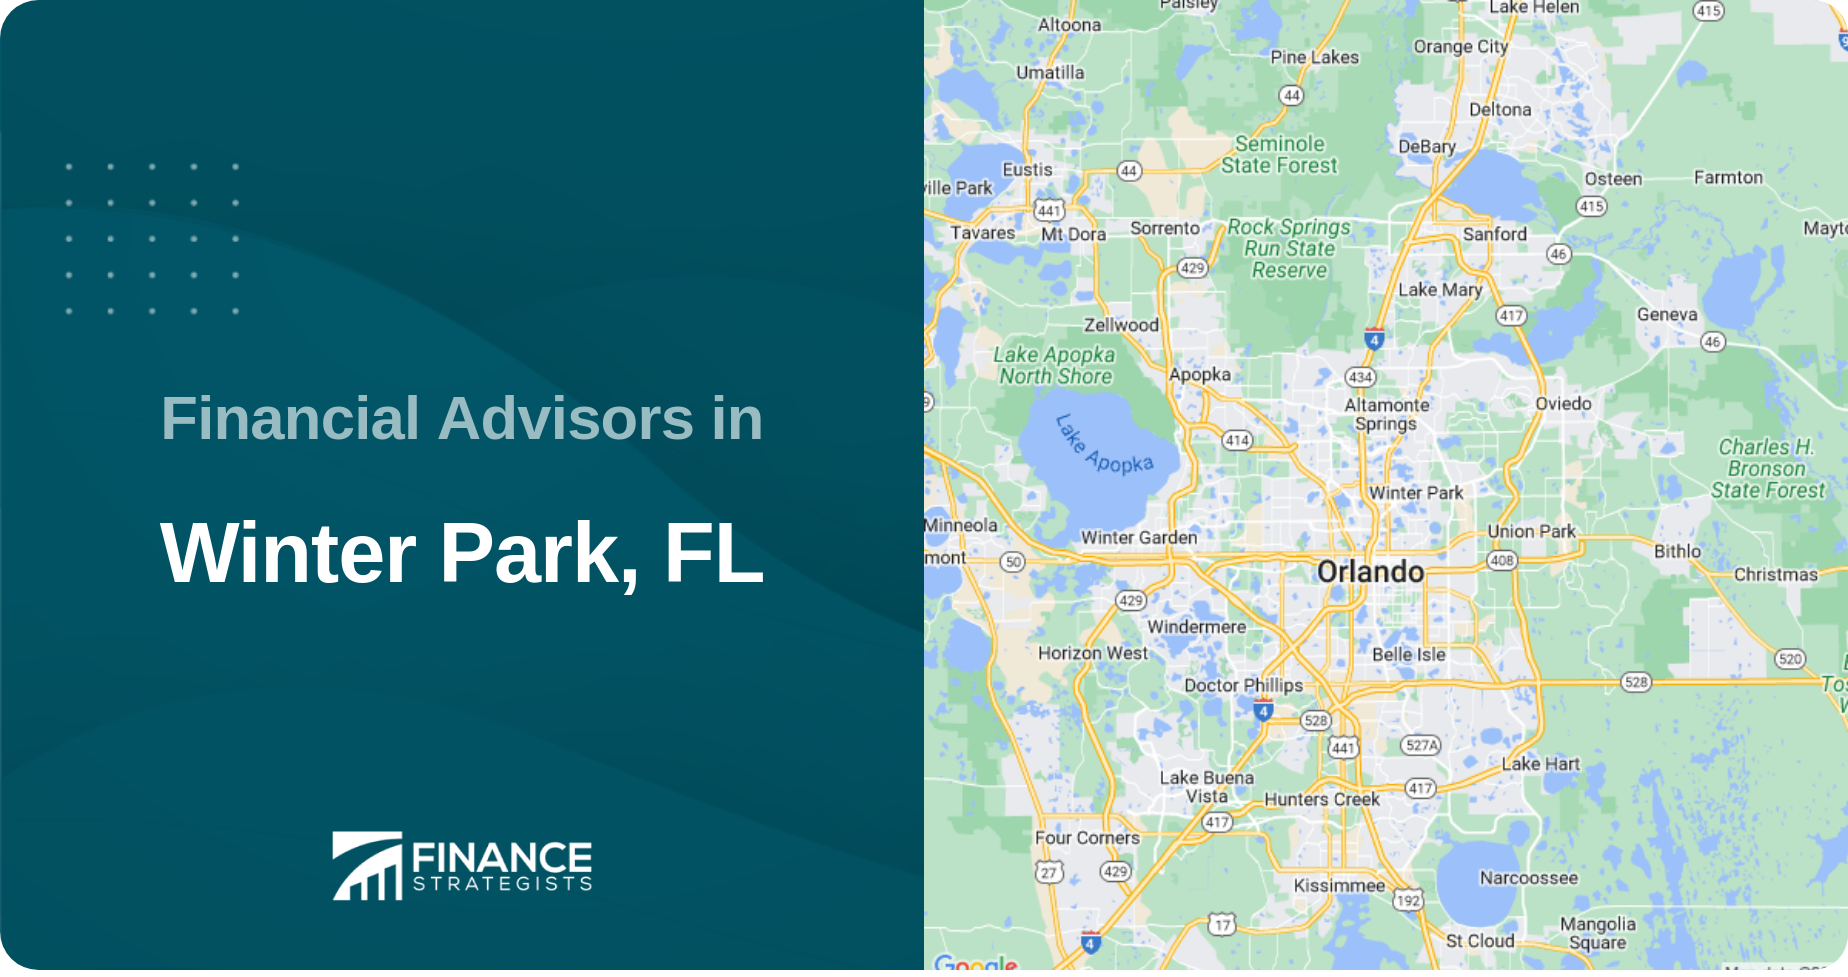 Financial Advisors in Winter Park, FL